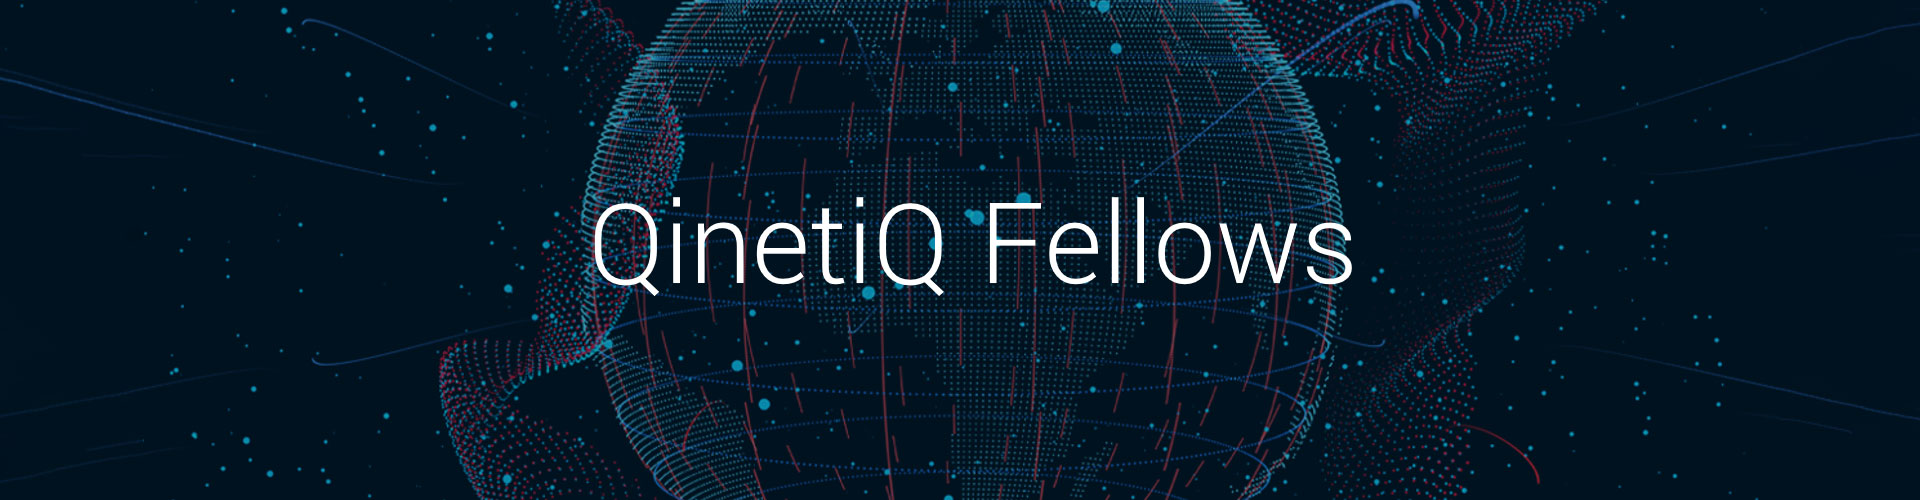 QinetiQ Fellows digital image